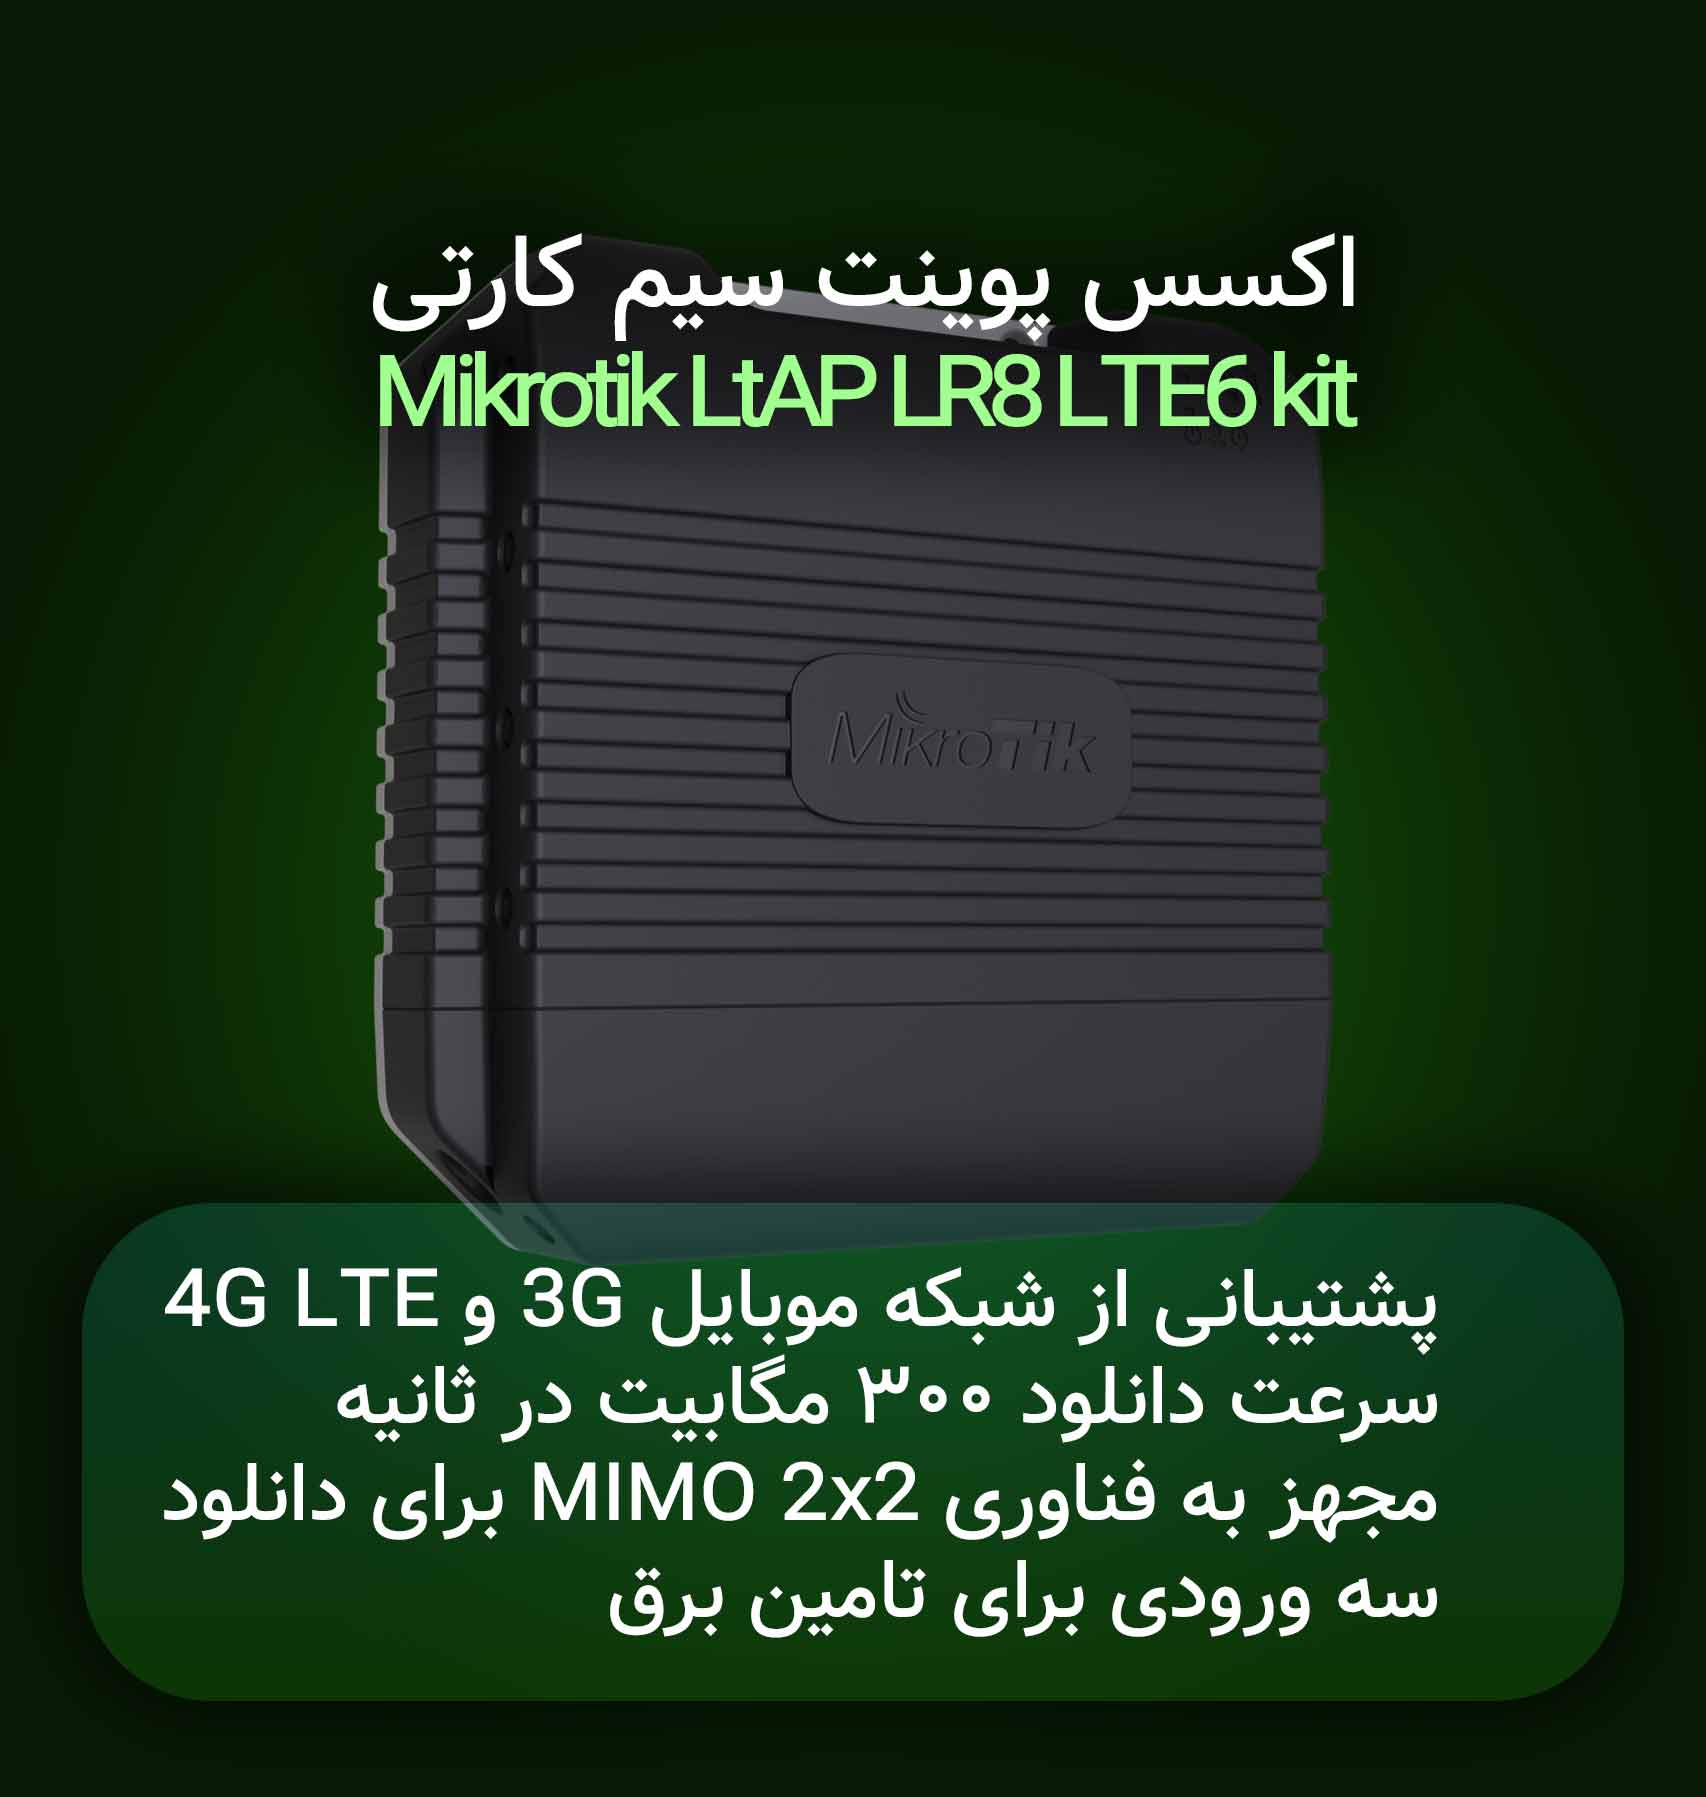 اکسس پوینت سیمکارت خور میکروتیک Mikrotik LtAP LR8 LTE6 kit